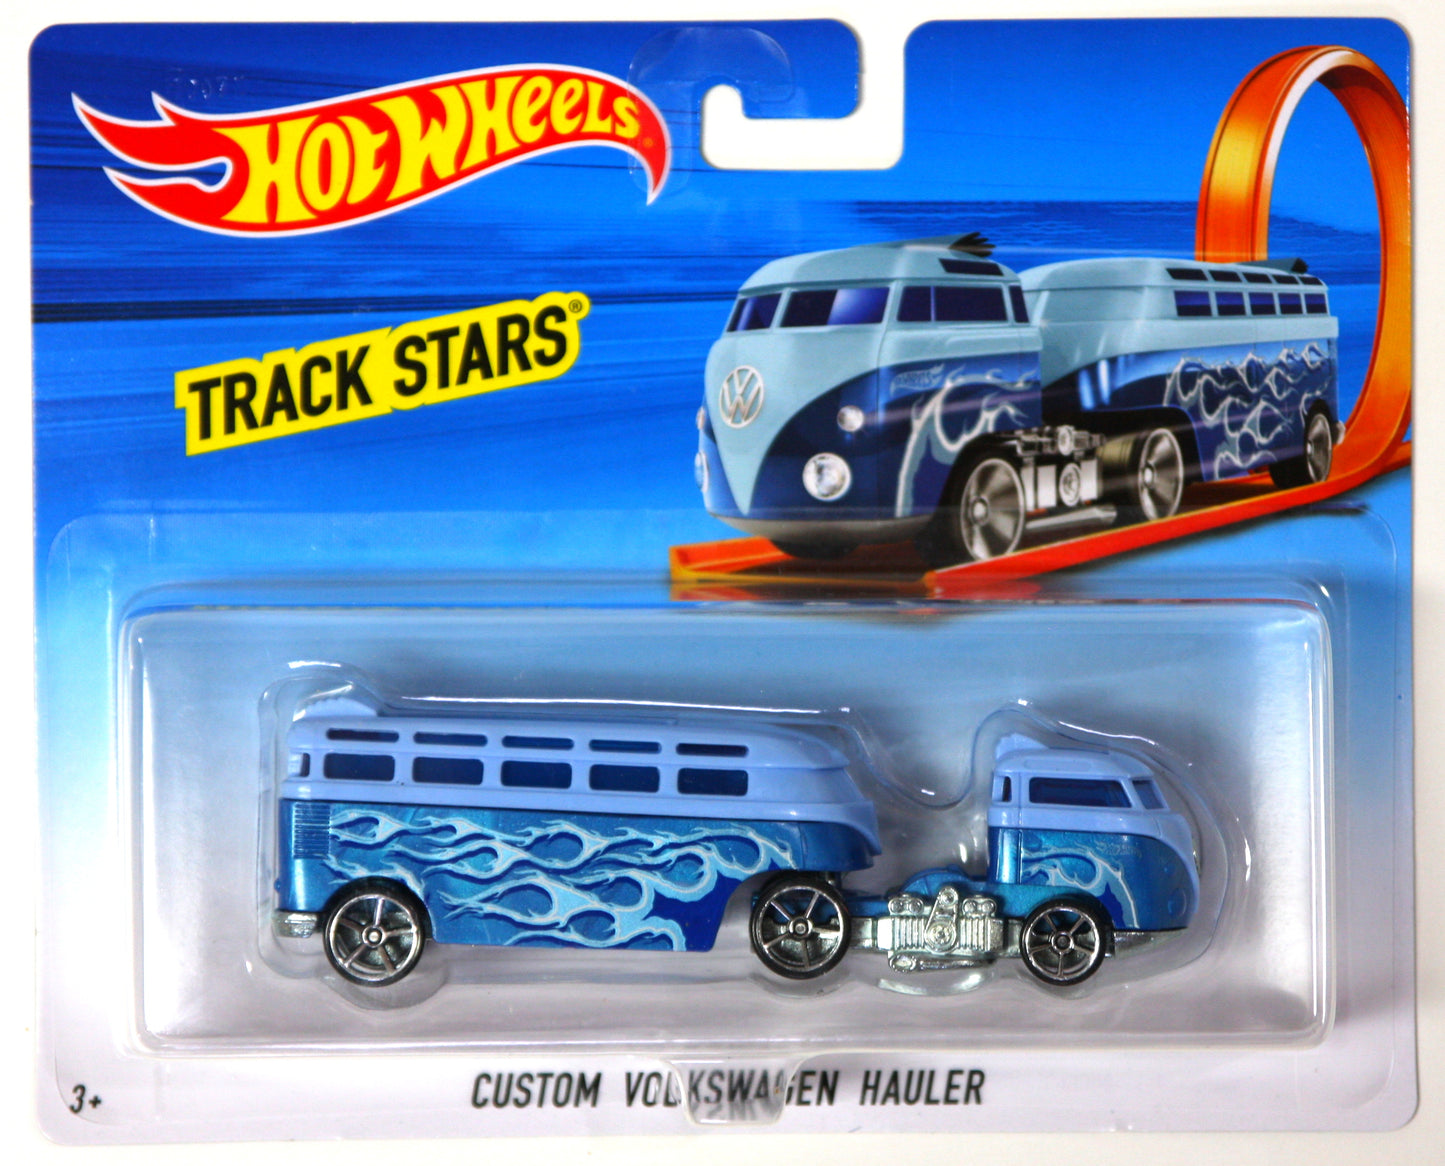 Hot Wheels 2017 - Track Stars - Custom Volkswagen Hauler - Blue